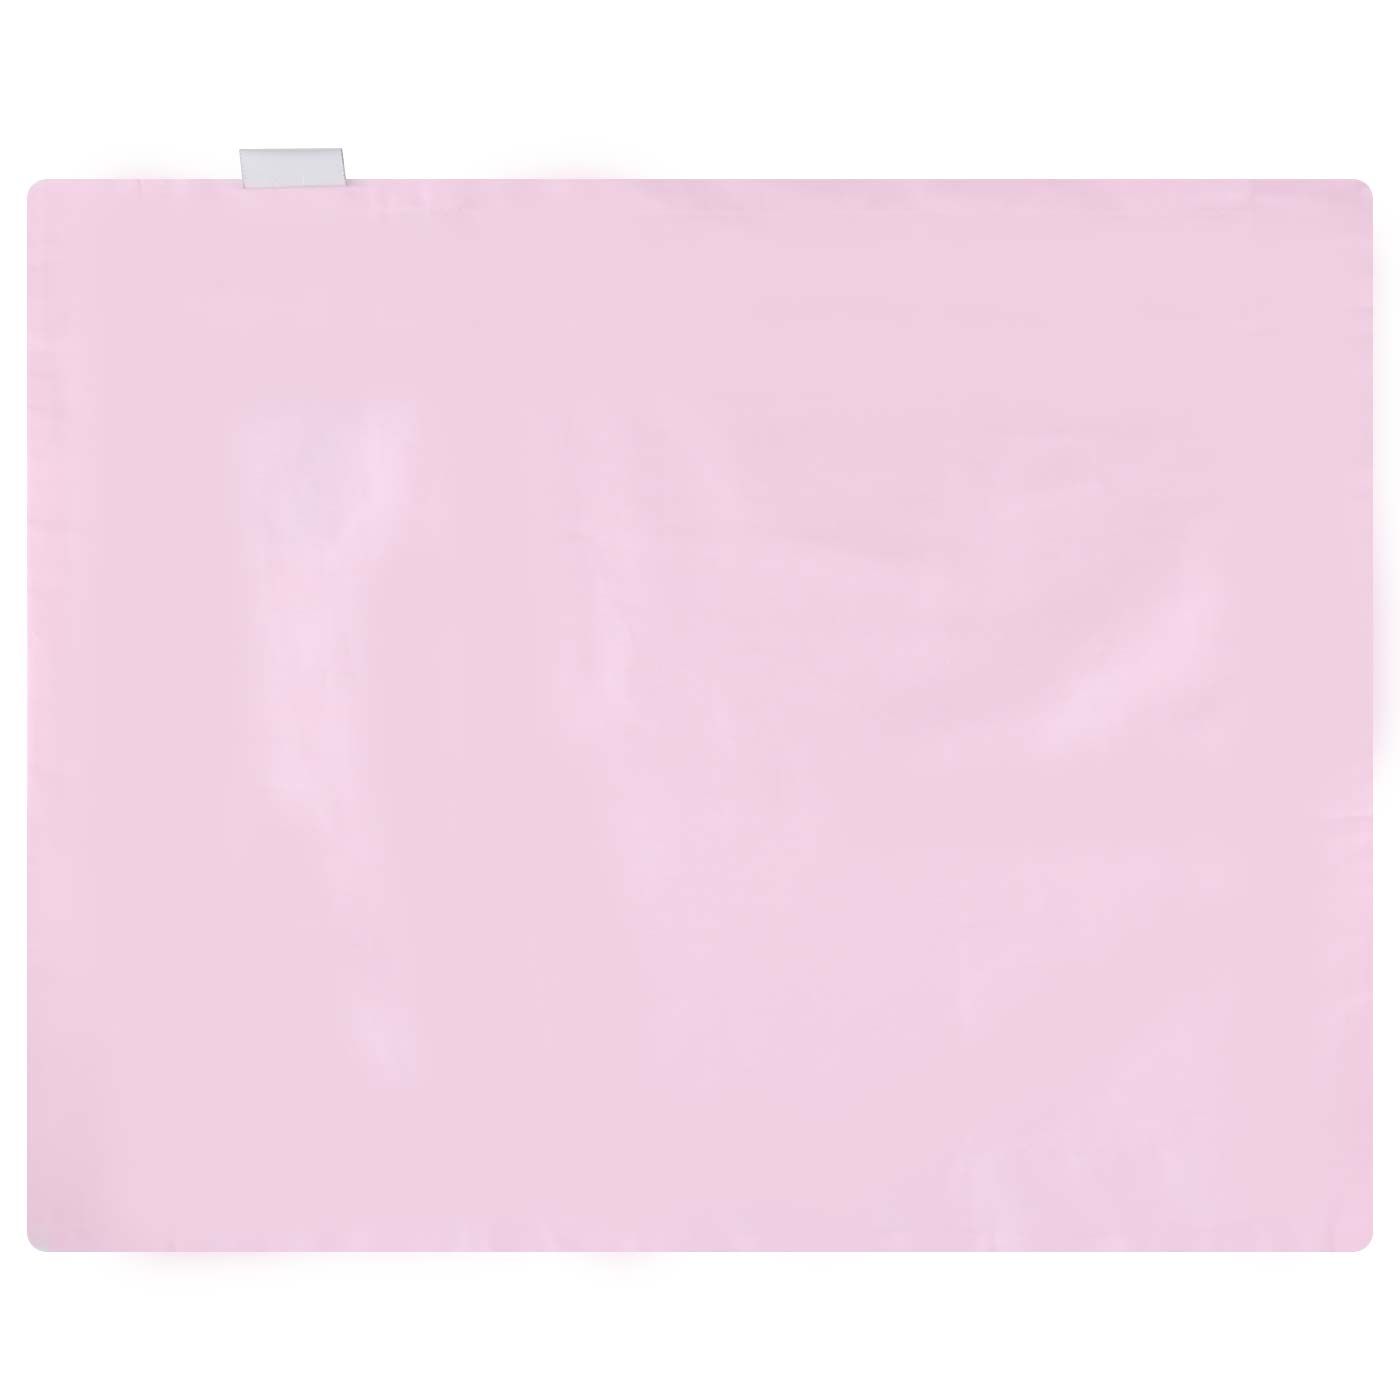 Infant Pillow Case Pink - 2